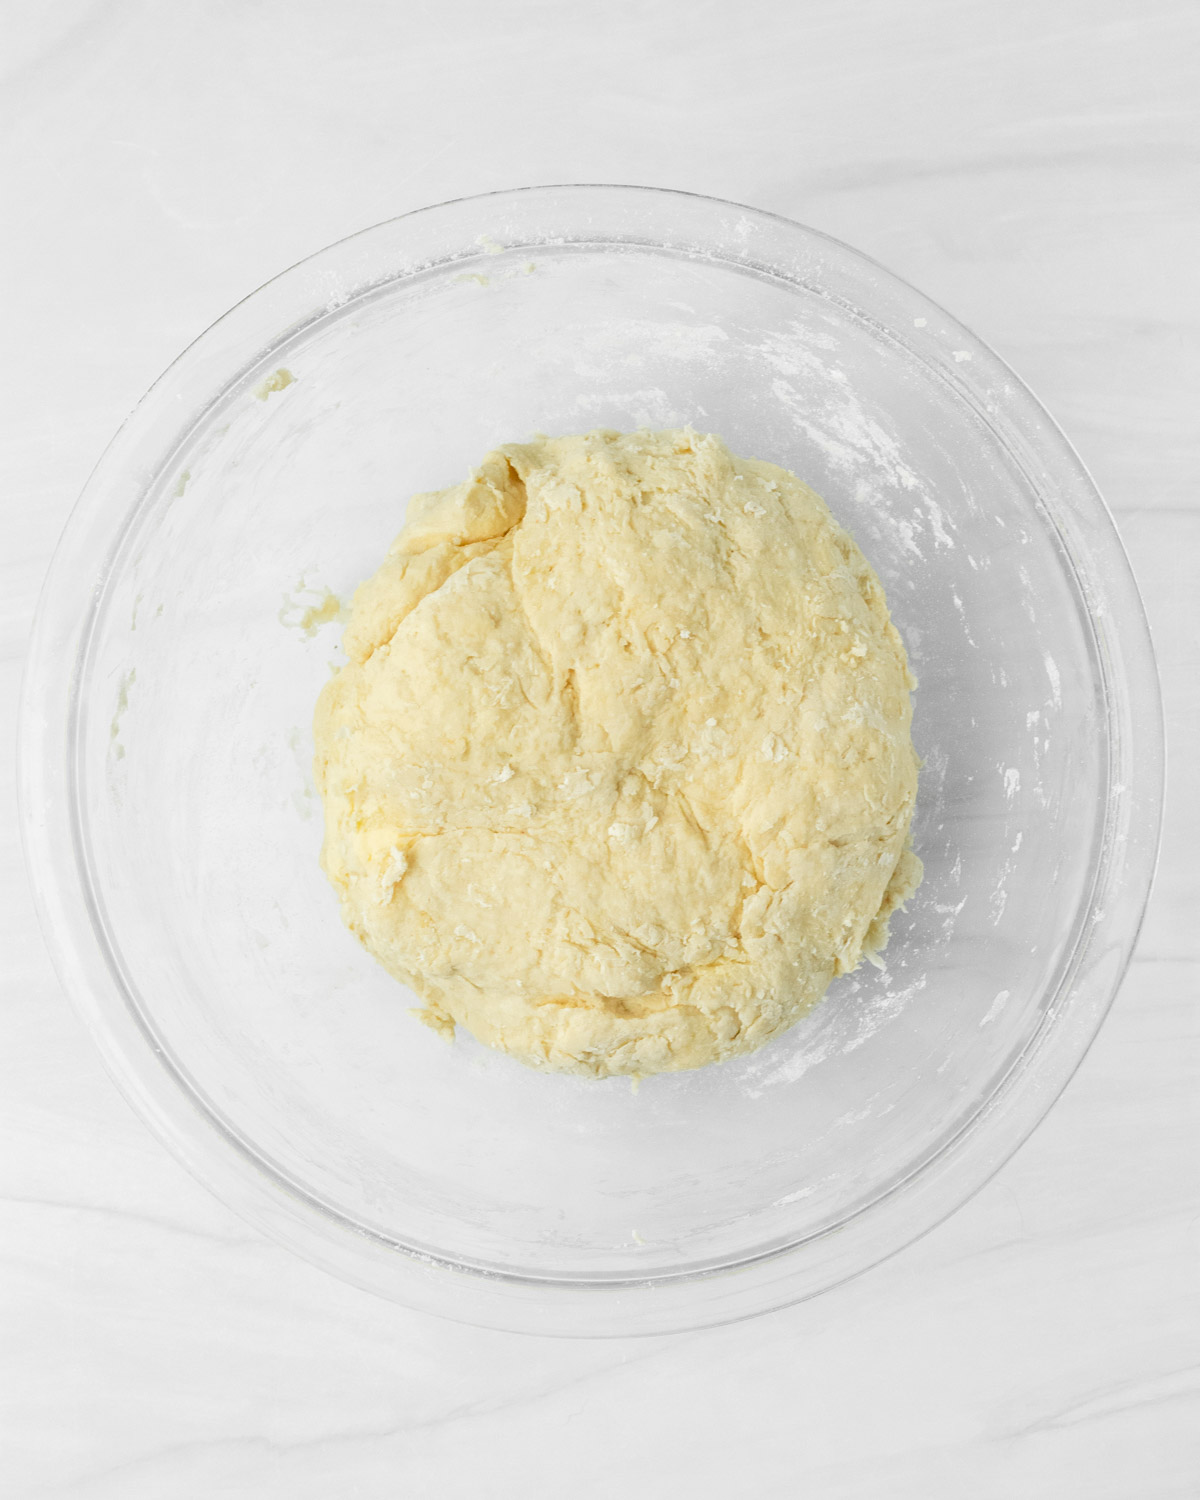 Step 4. Mix into a ball of dough